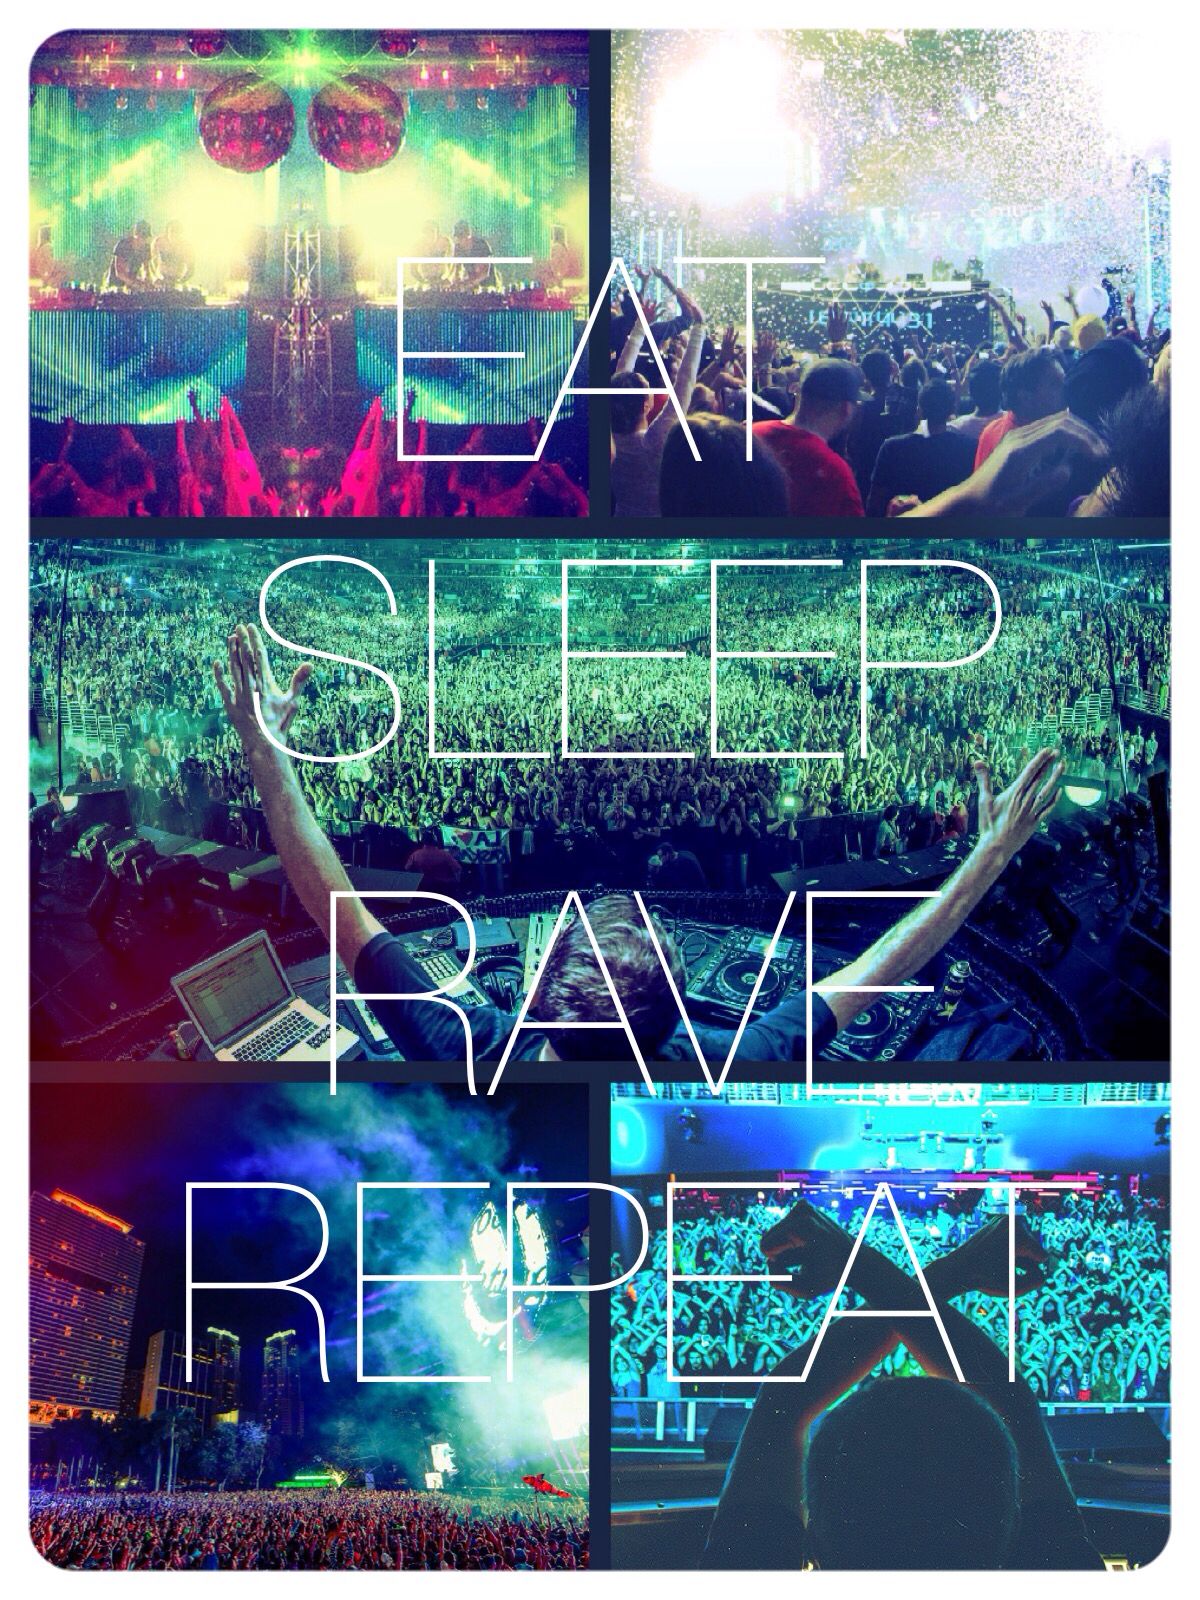 EAT SLEEP RAVE REPEAT. Eat sleep rave repeat, Sleep, Life